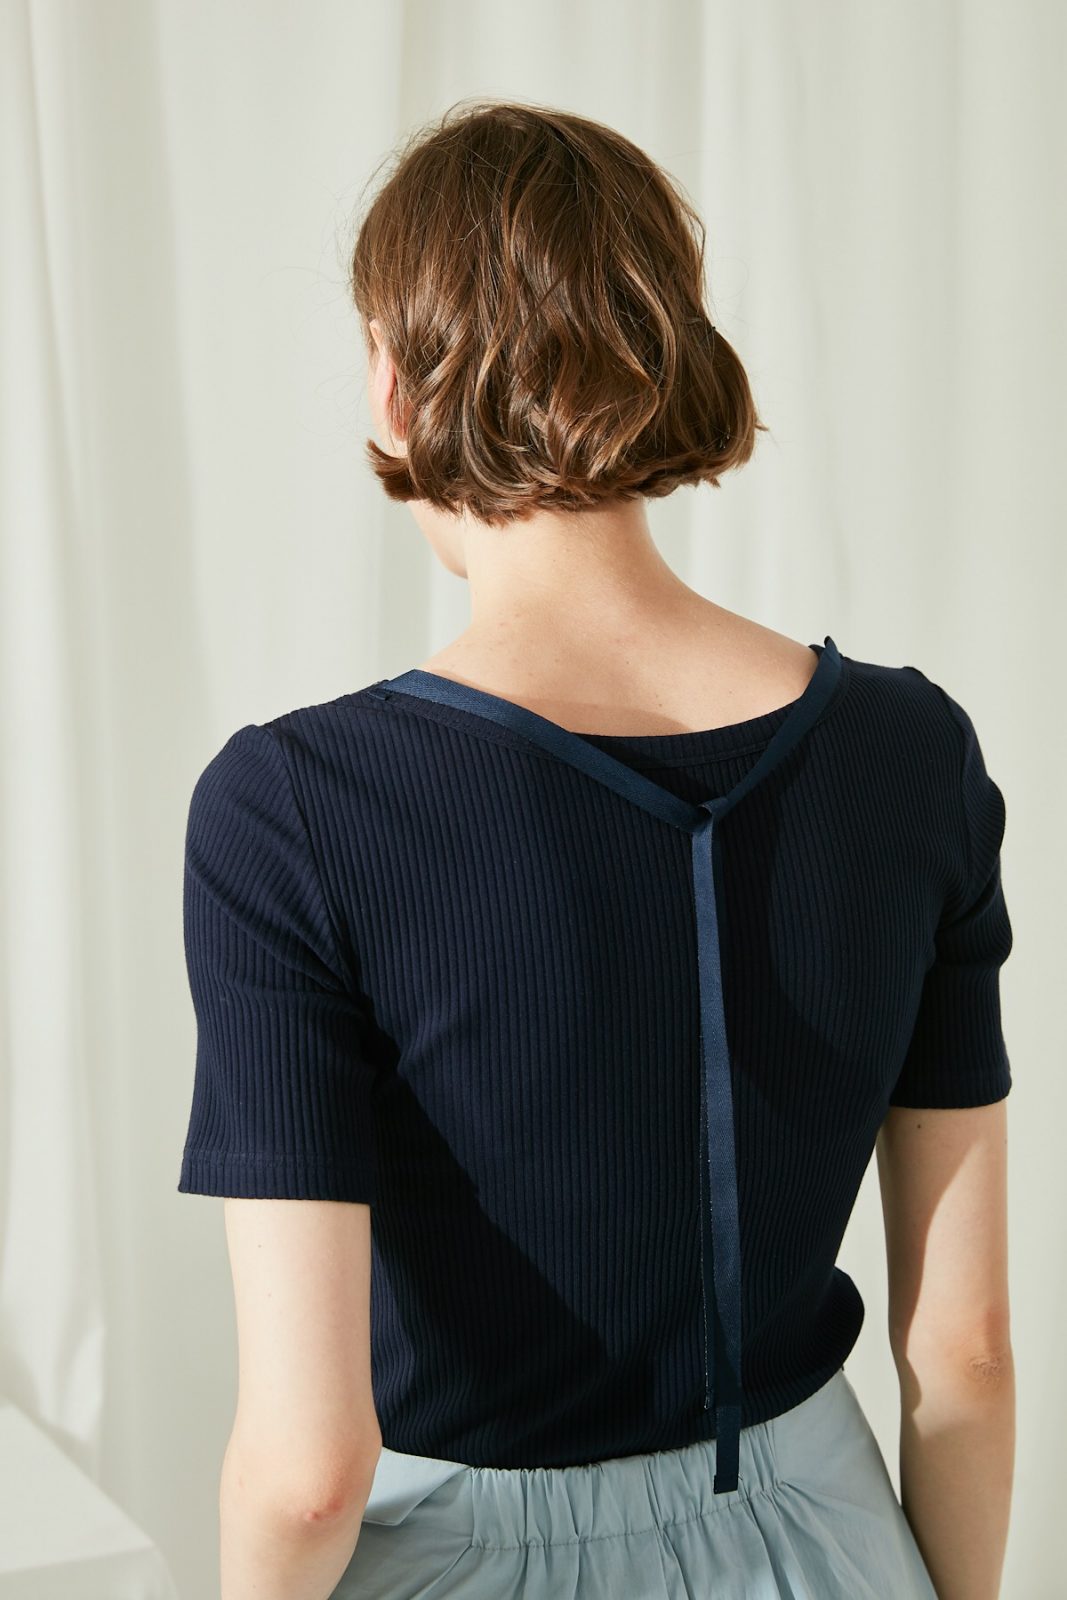 SKYE San Francisco SF ethical modern minimalist quality women clothing fashion Elissa Stretch Knit Cotton Top blue 3